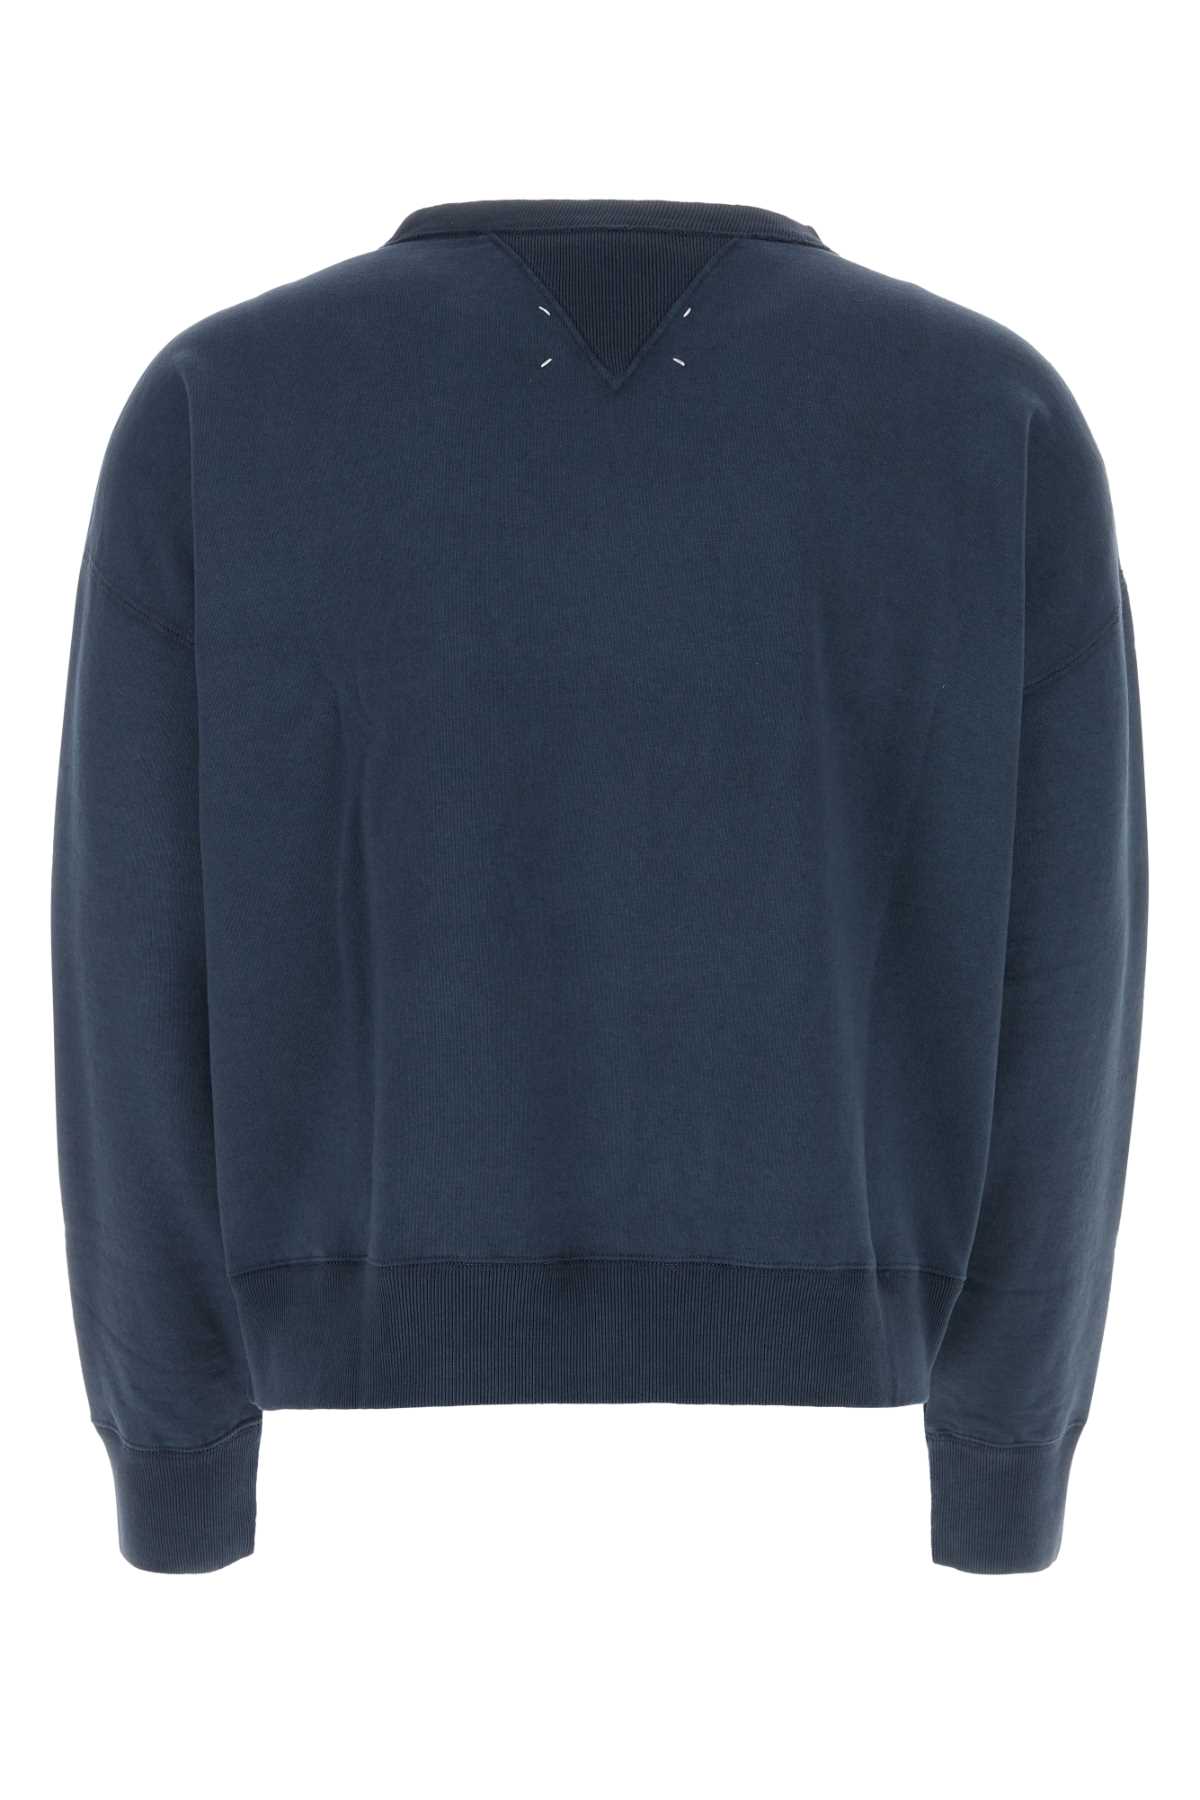 Shop Maison Margiela Navy Blue Cotton Sweatshirt